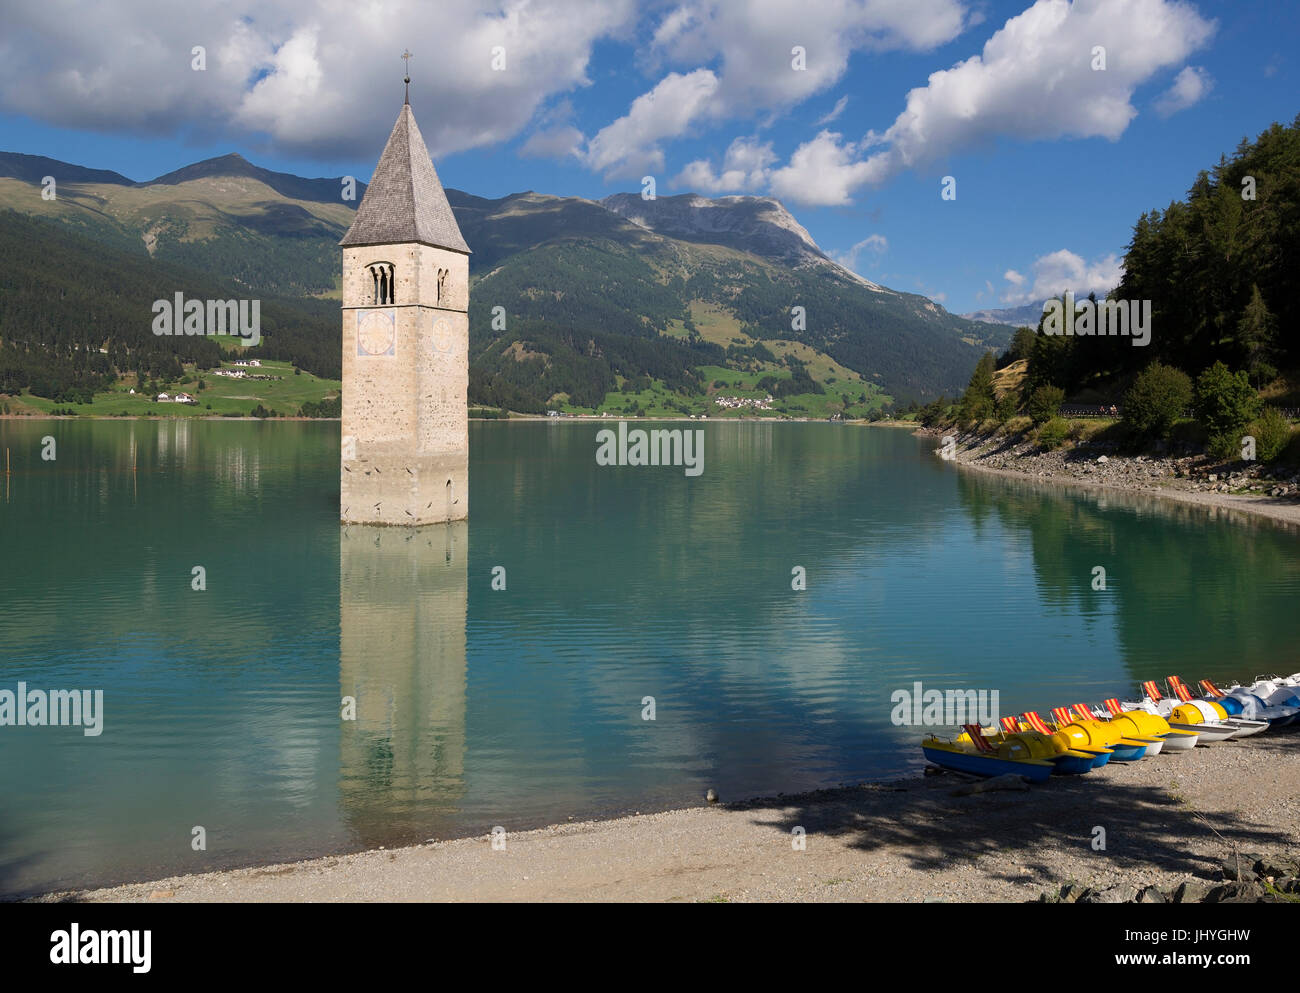 Steeple in the crisp lake, Graun, Vinschgau, South Tirol, Italy - Spire in brine Resia, Graun, Vinschgau, South Tyrol, Italy, Kirchturm im Reschensee, Stock Photo